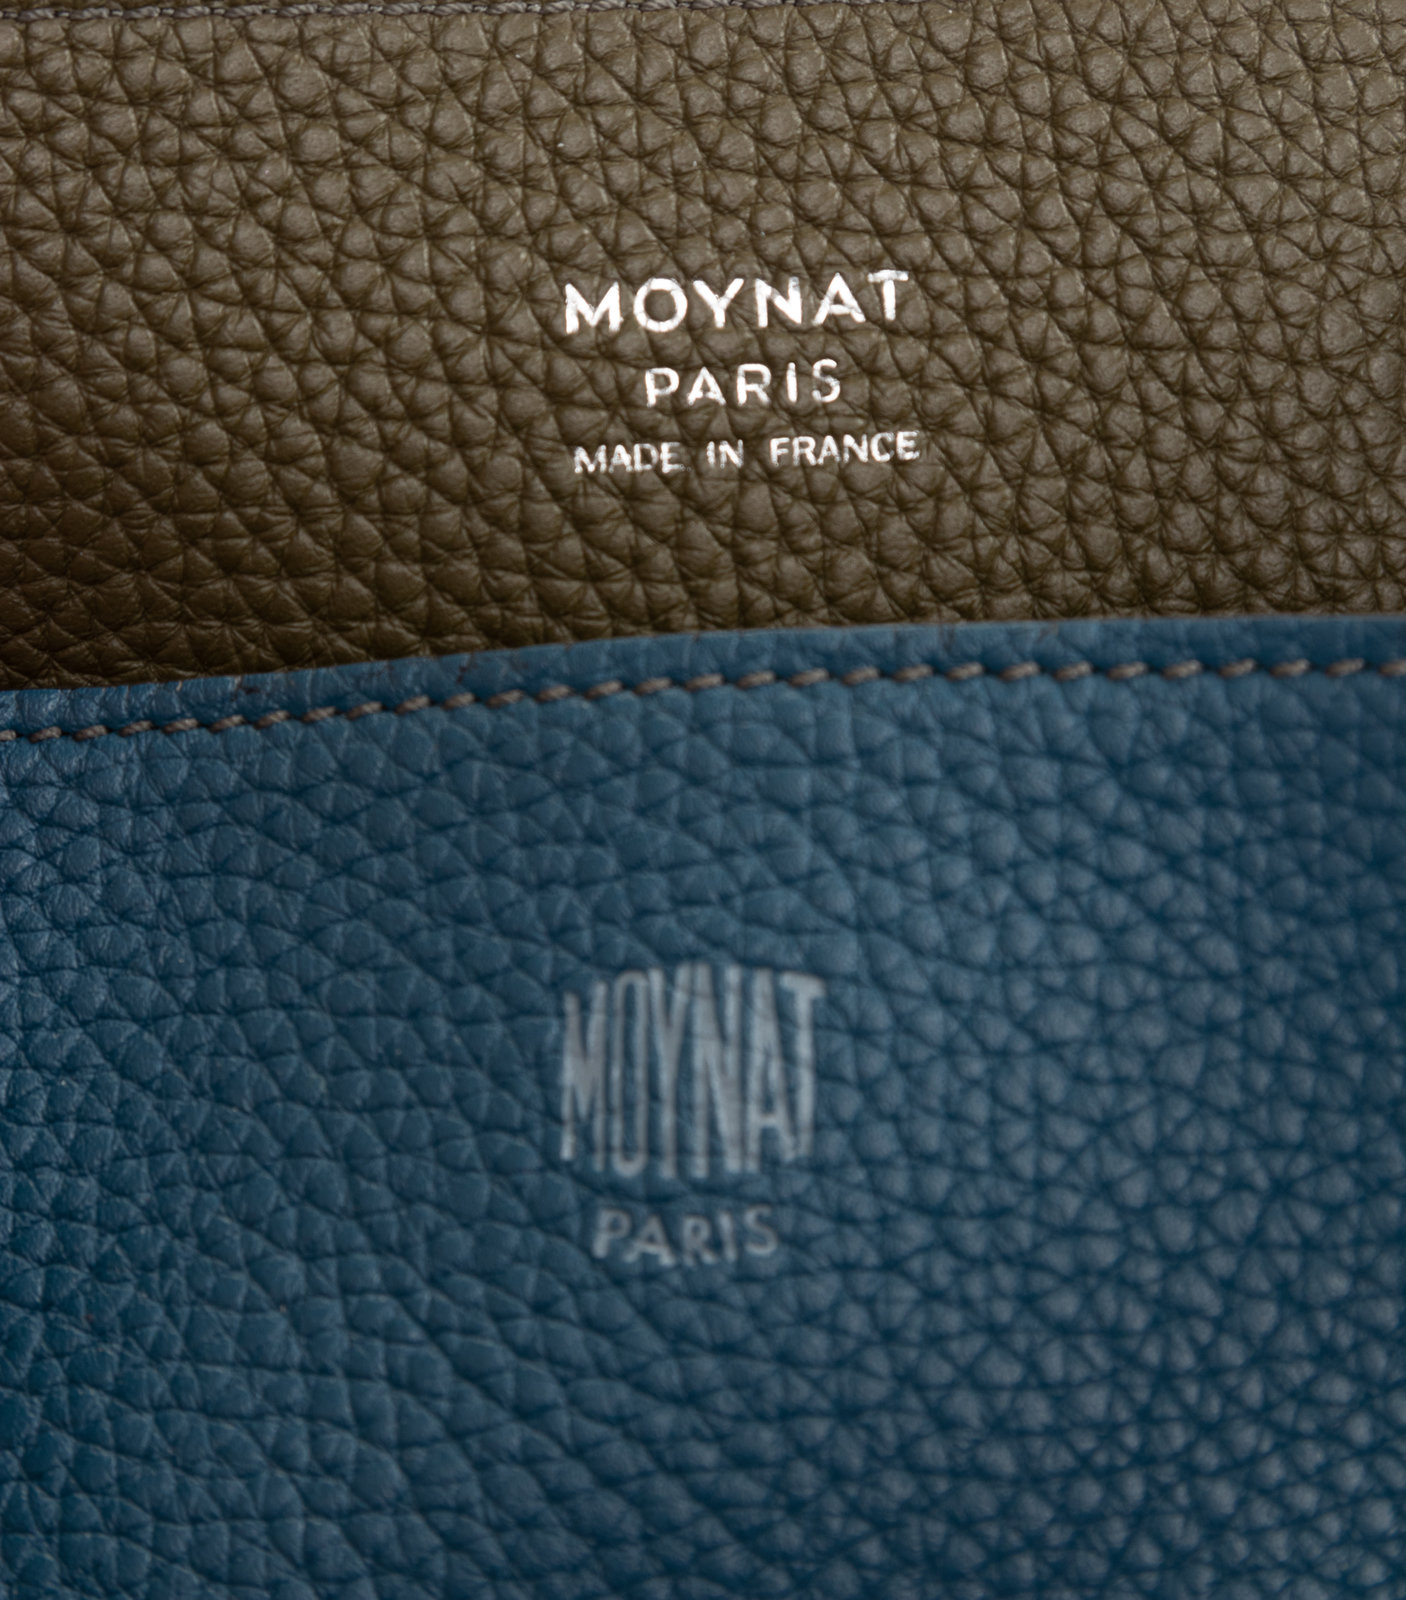 Moynat Leather Trim Tote Bag